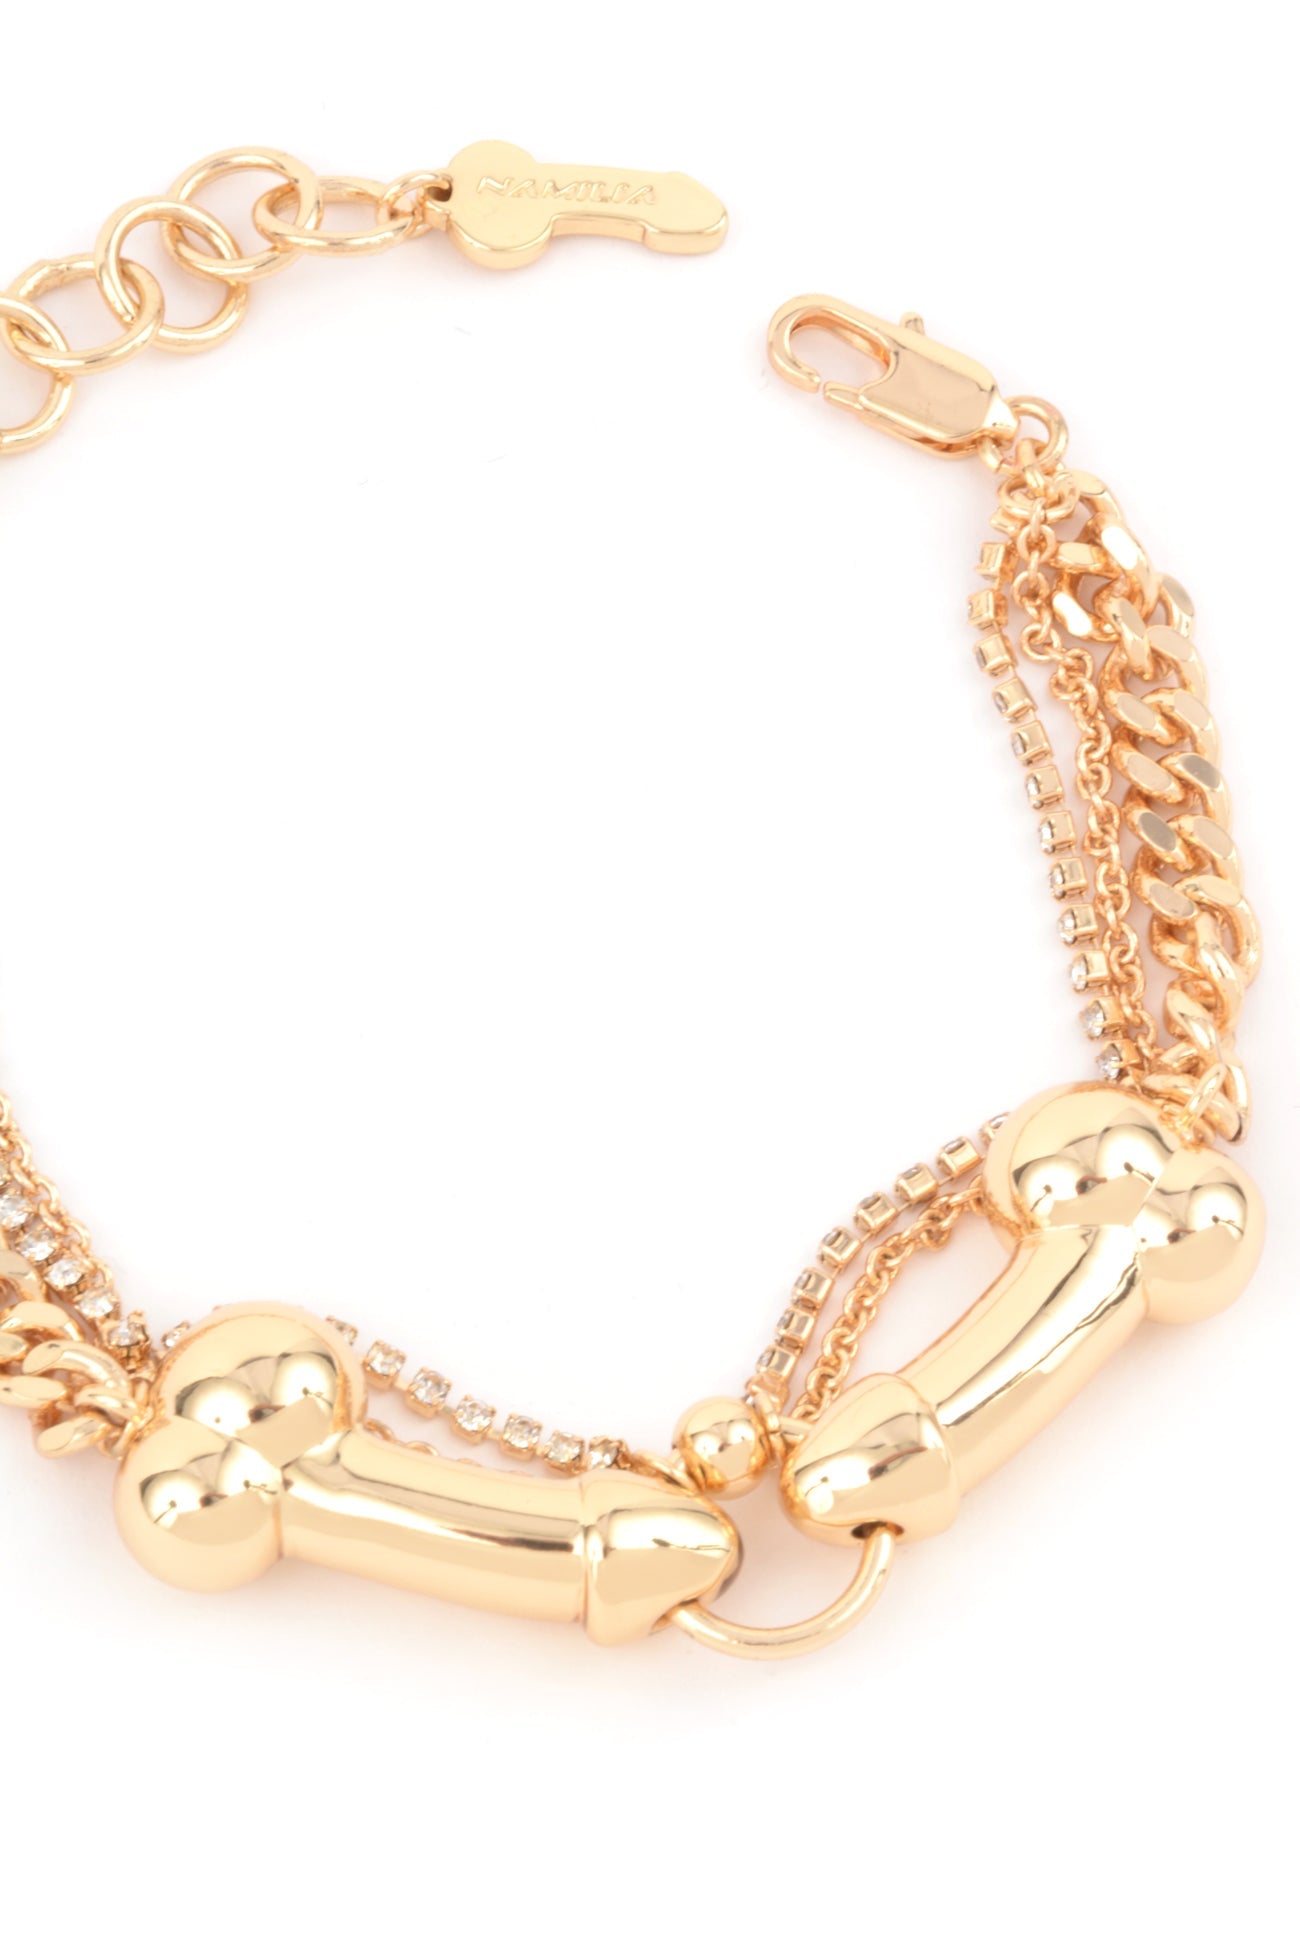 NAMILIA dick rhinestone bracelet - gold,